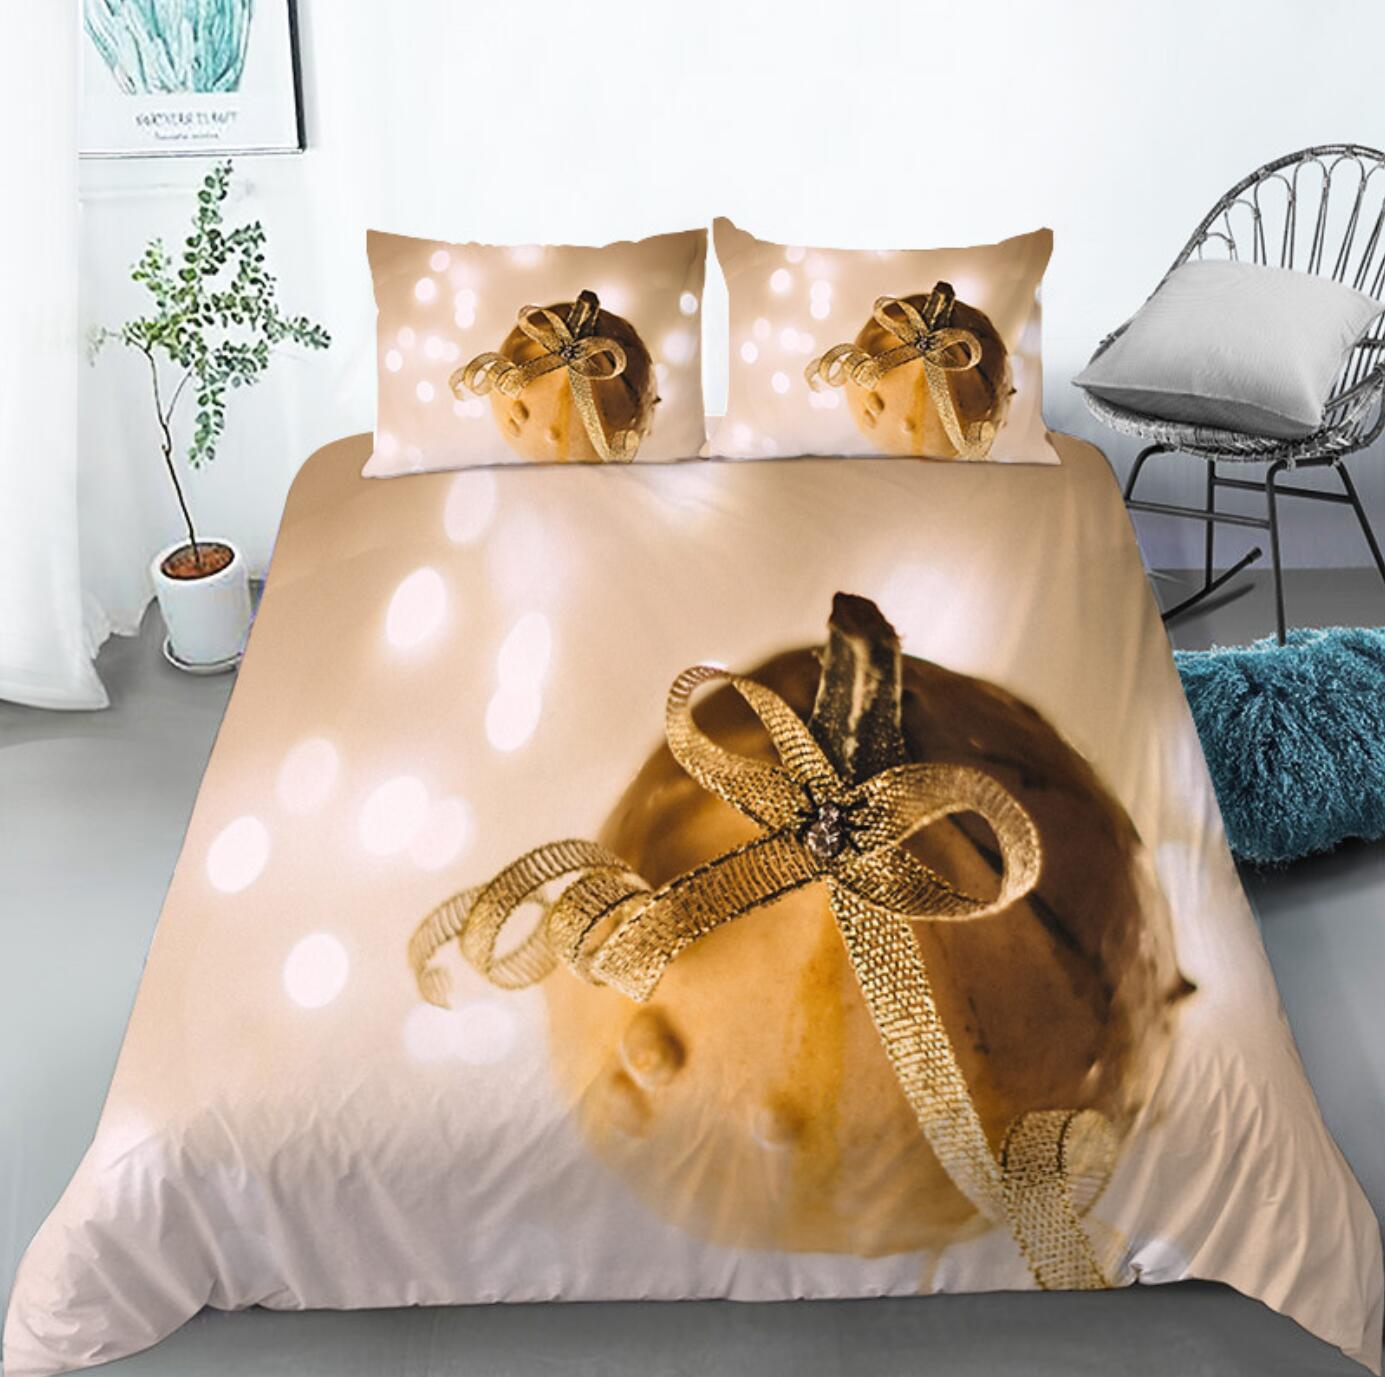 3D Golden Ball 32116 Christmas Quilt Duvet Cover Xmas Bed Pillowcases